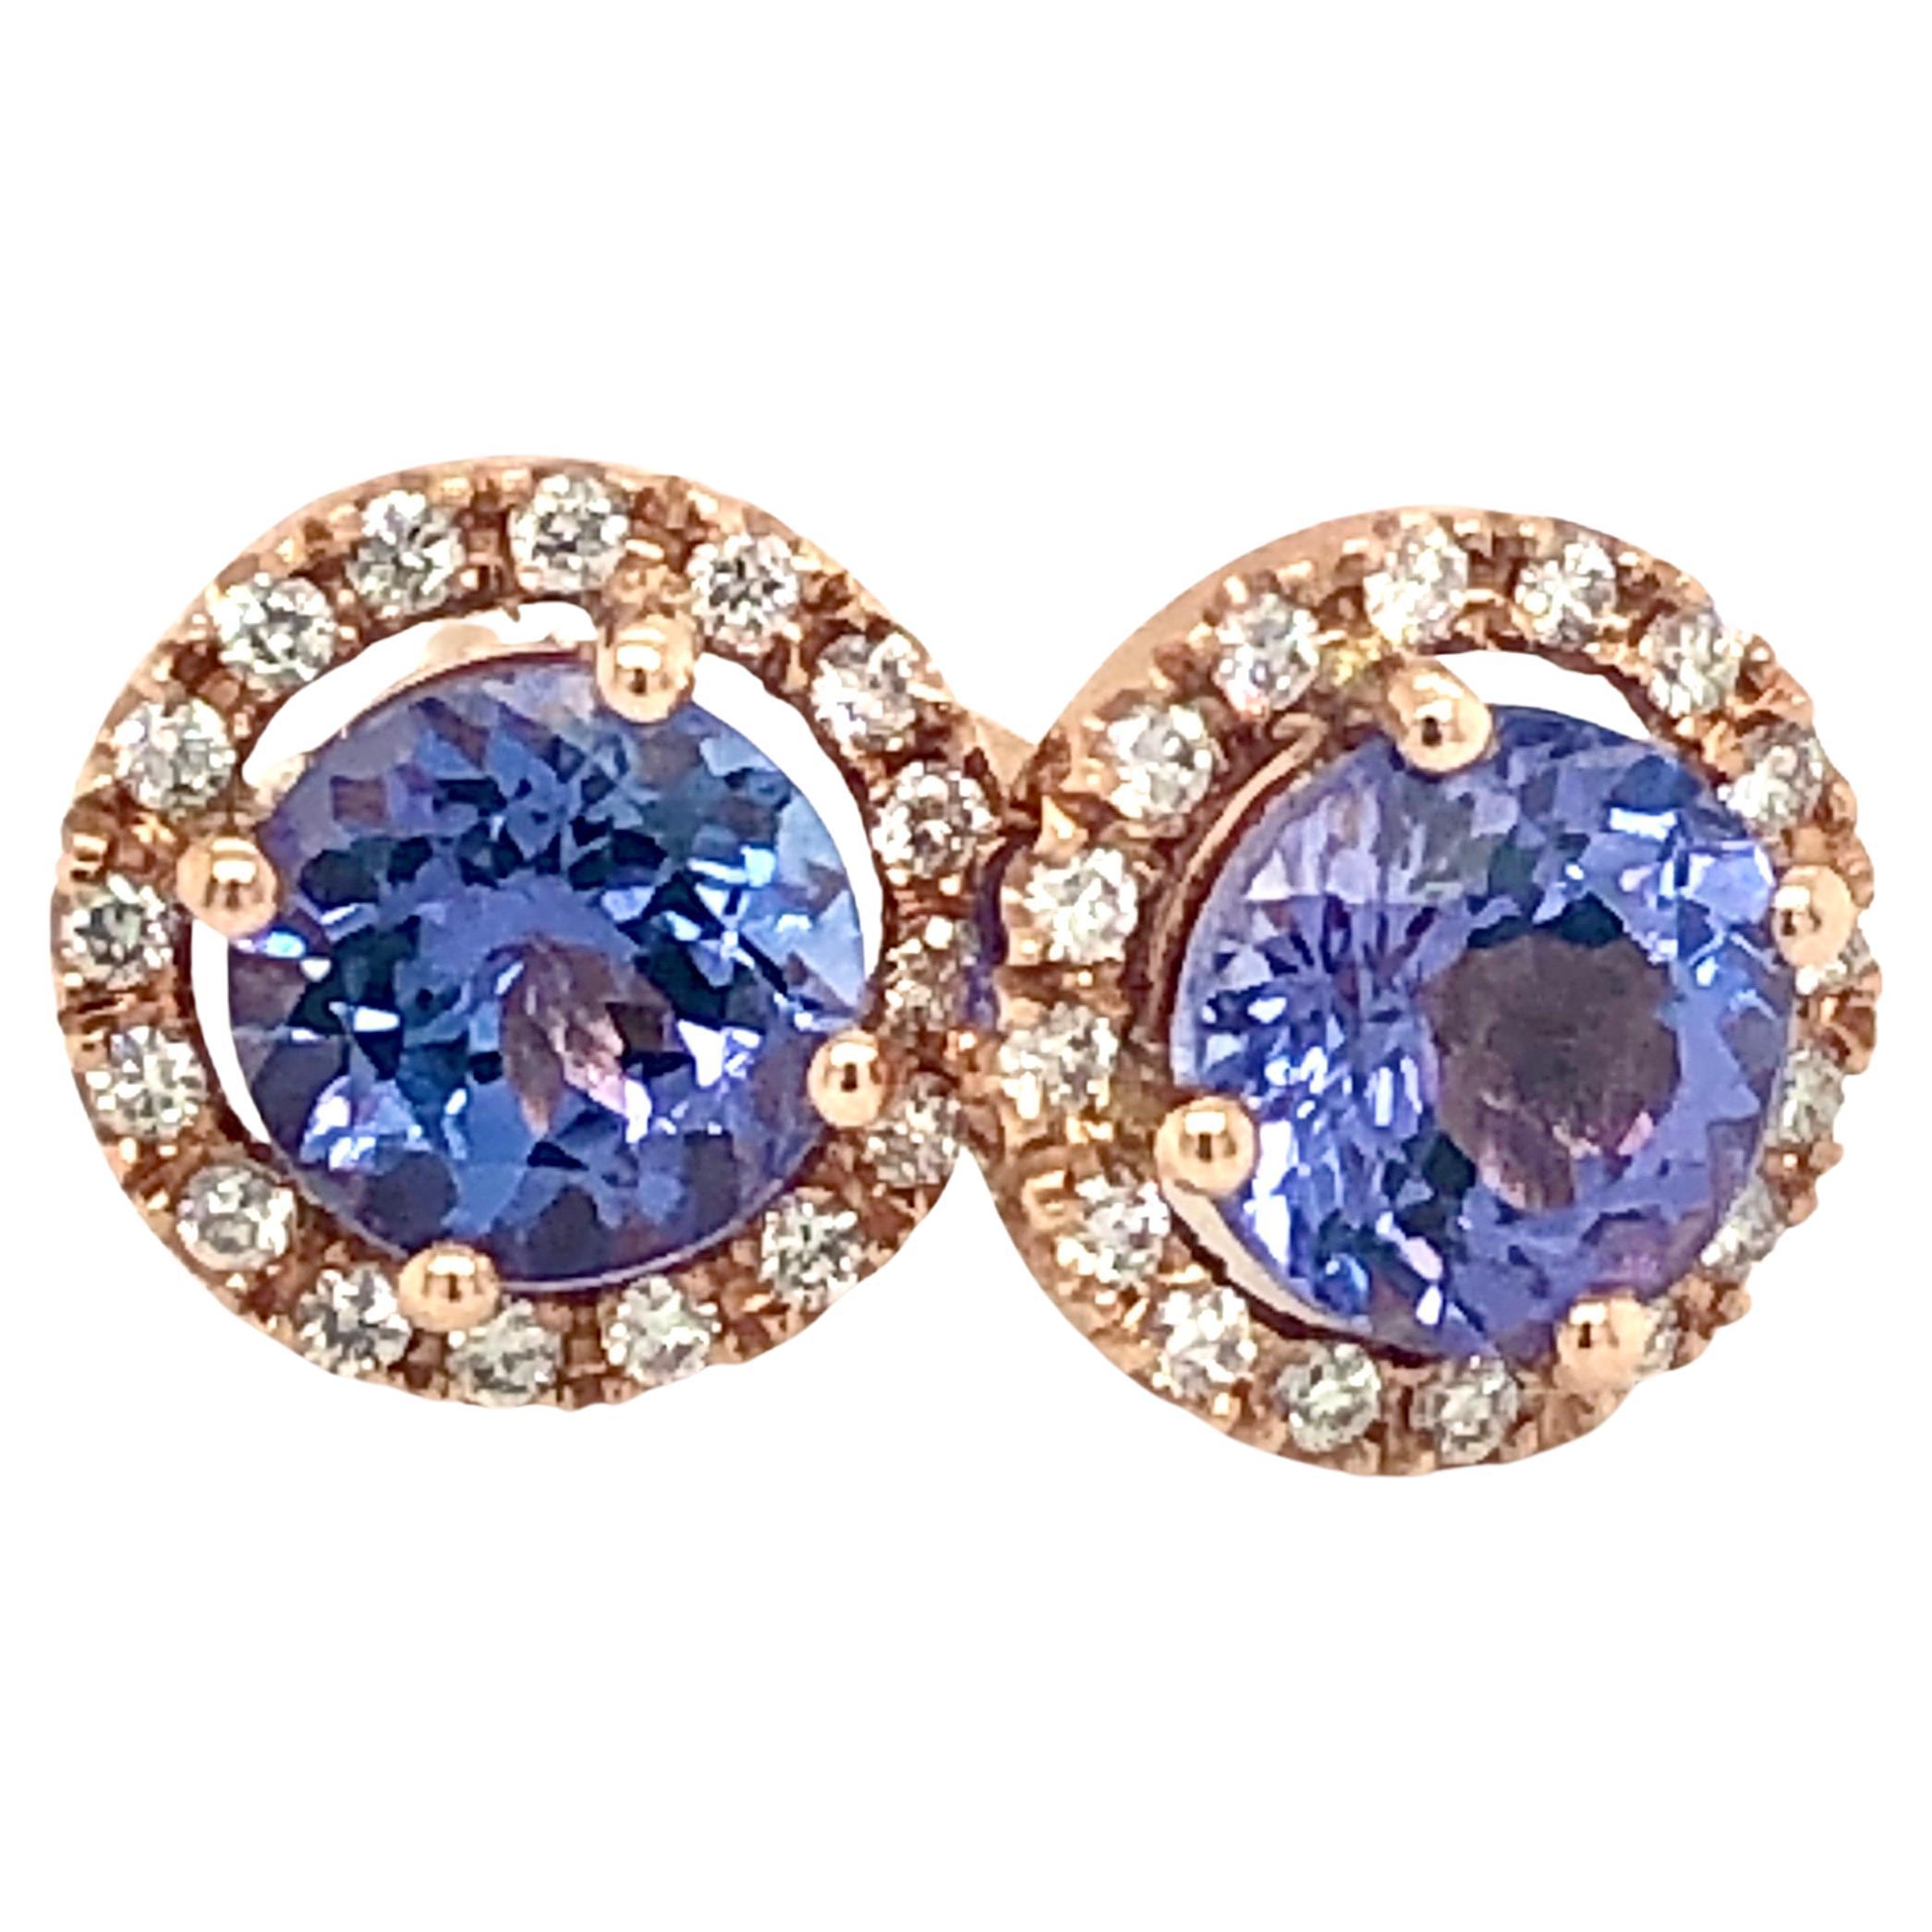 18 Karat Rose Gold 2.0ct Tanzanite and 0.18ct Diamond Earrings by Jochen Leën